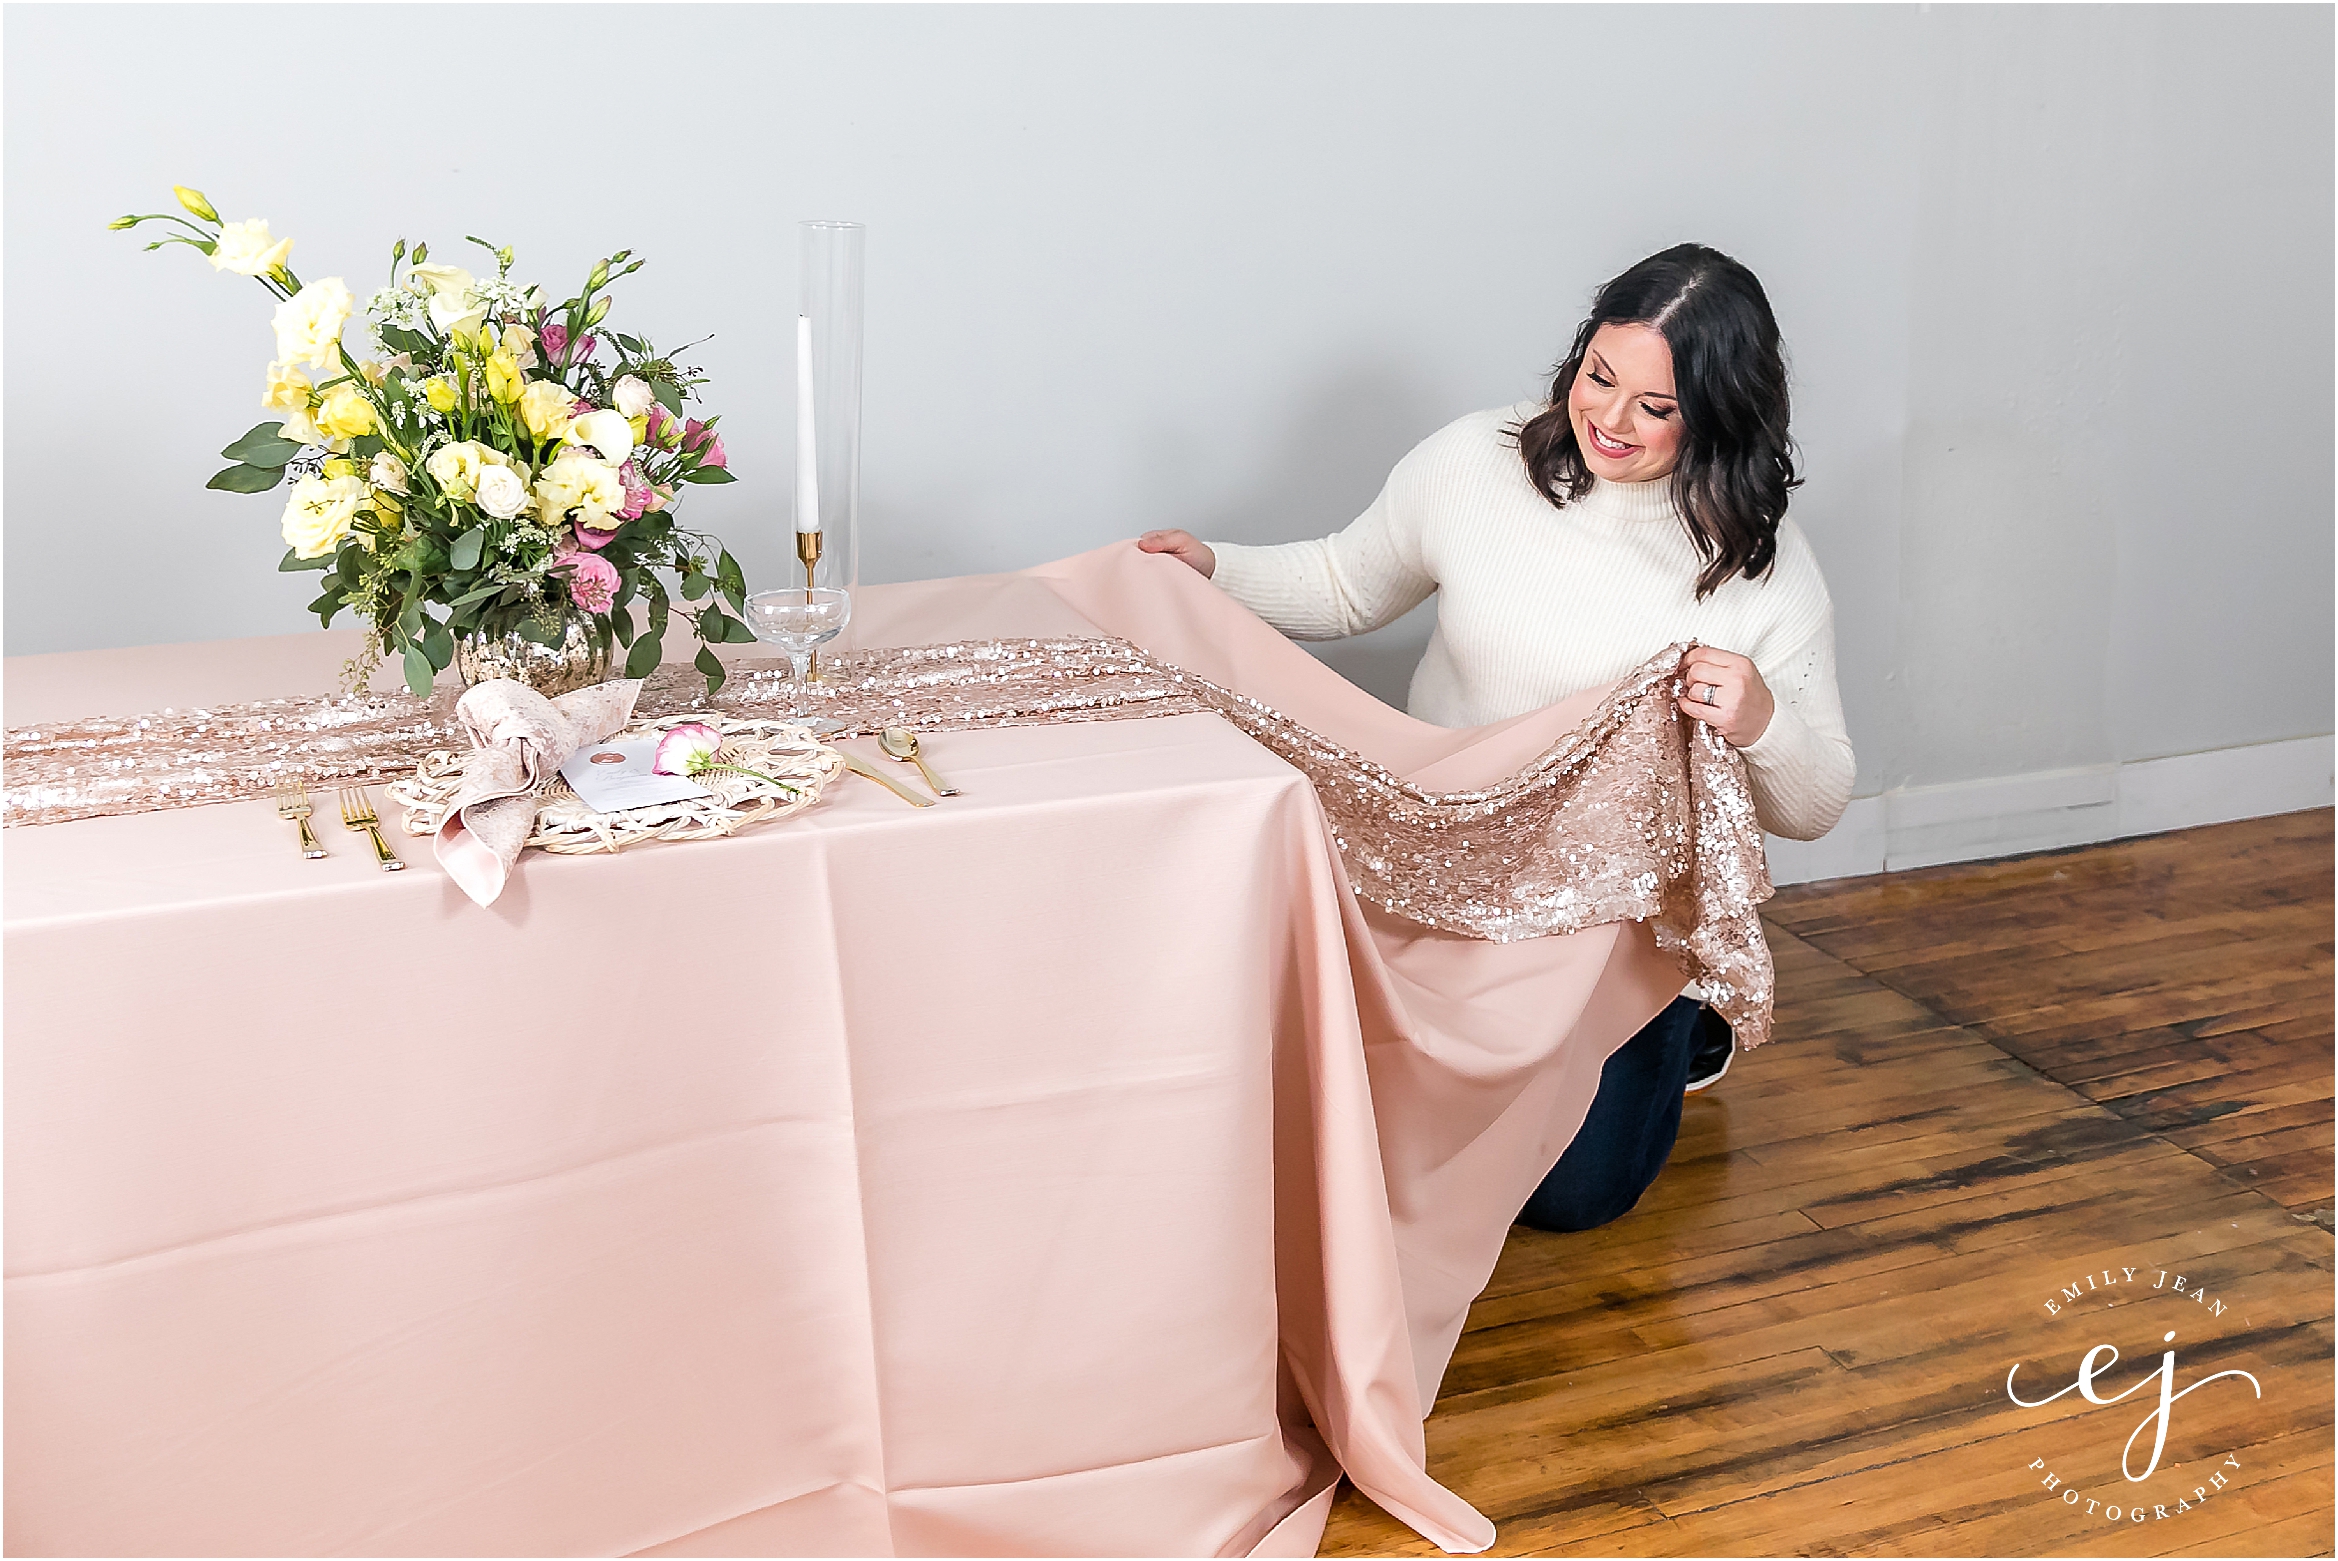 wedding coordinator fluffing table linen